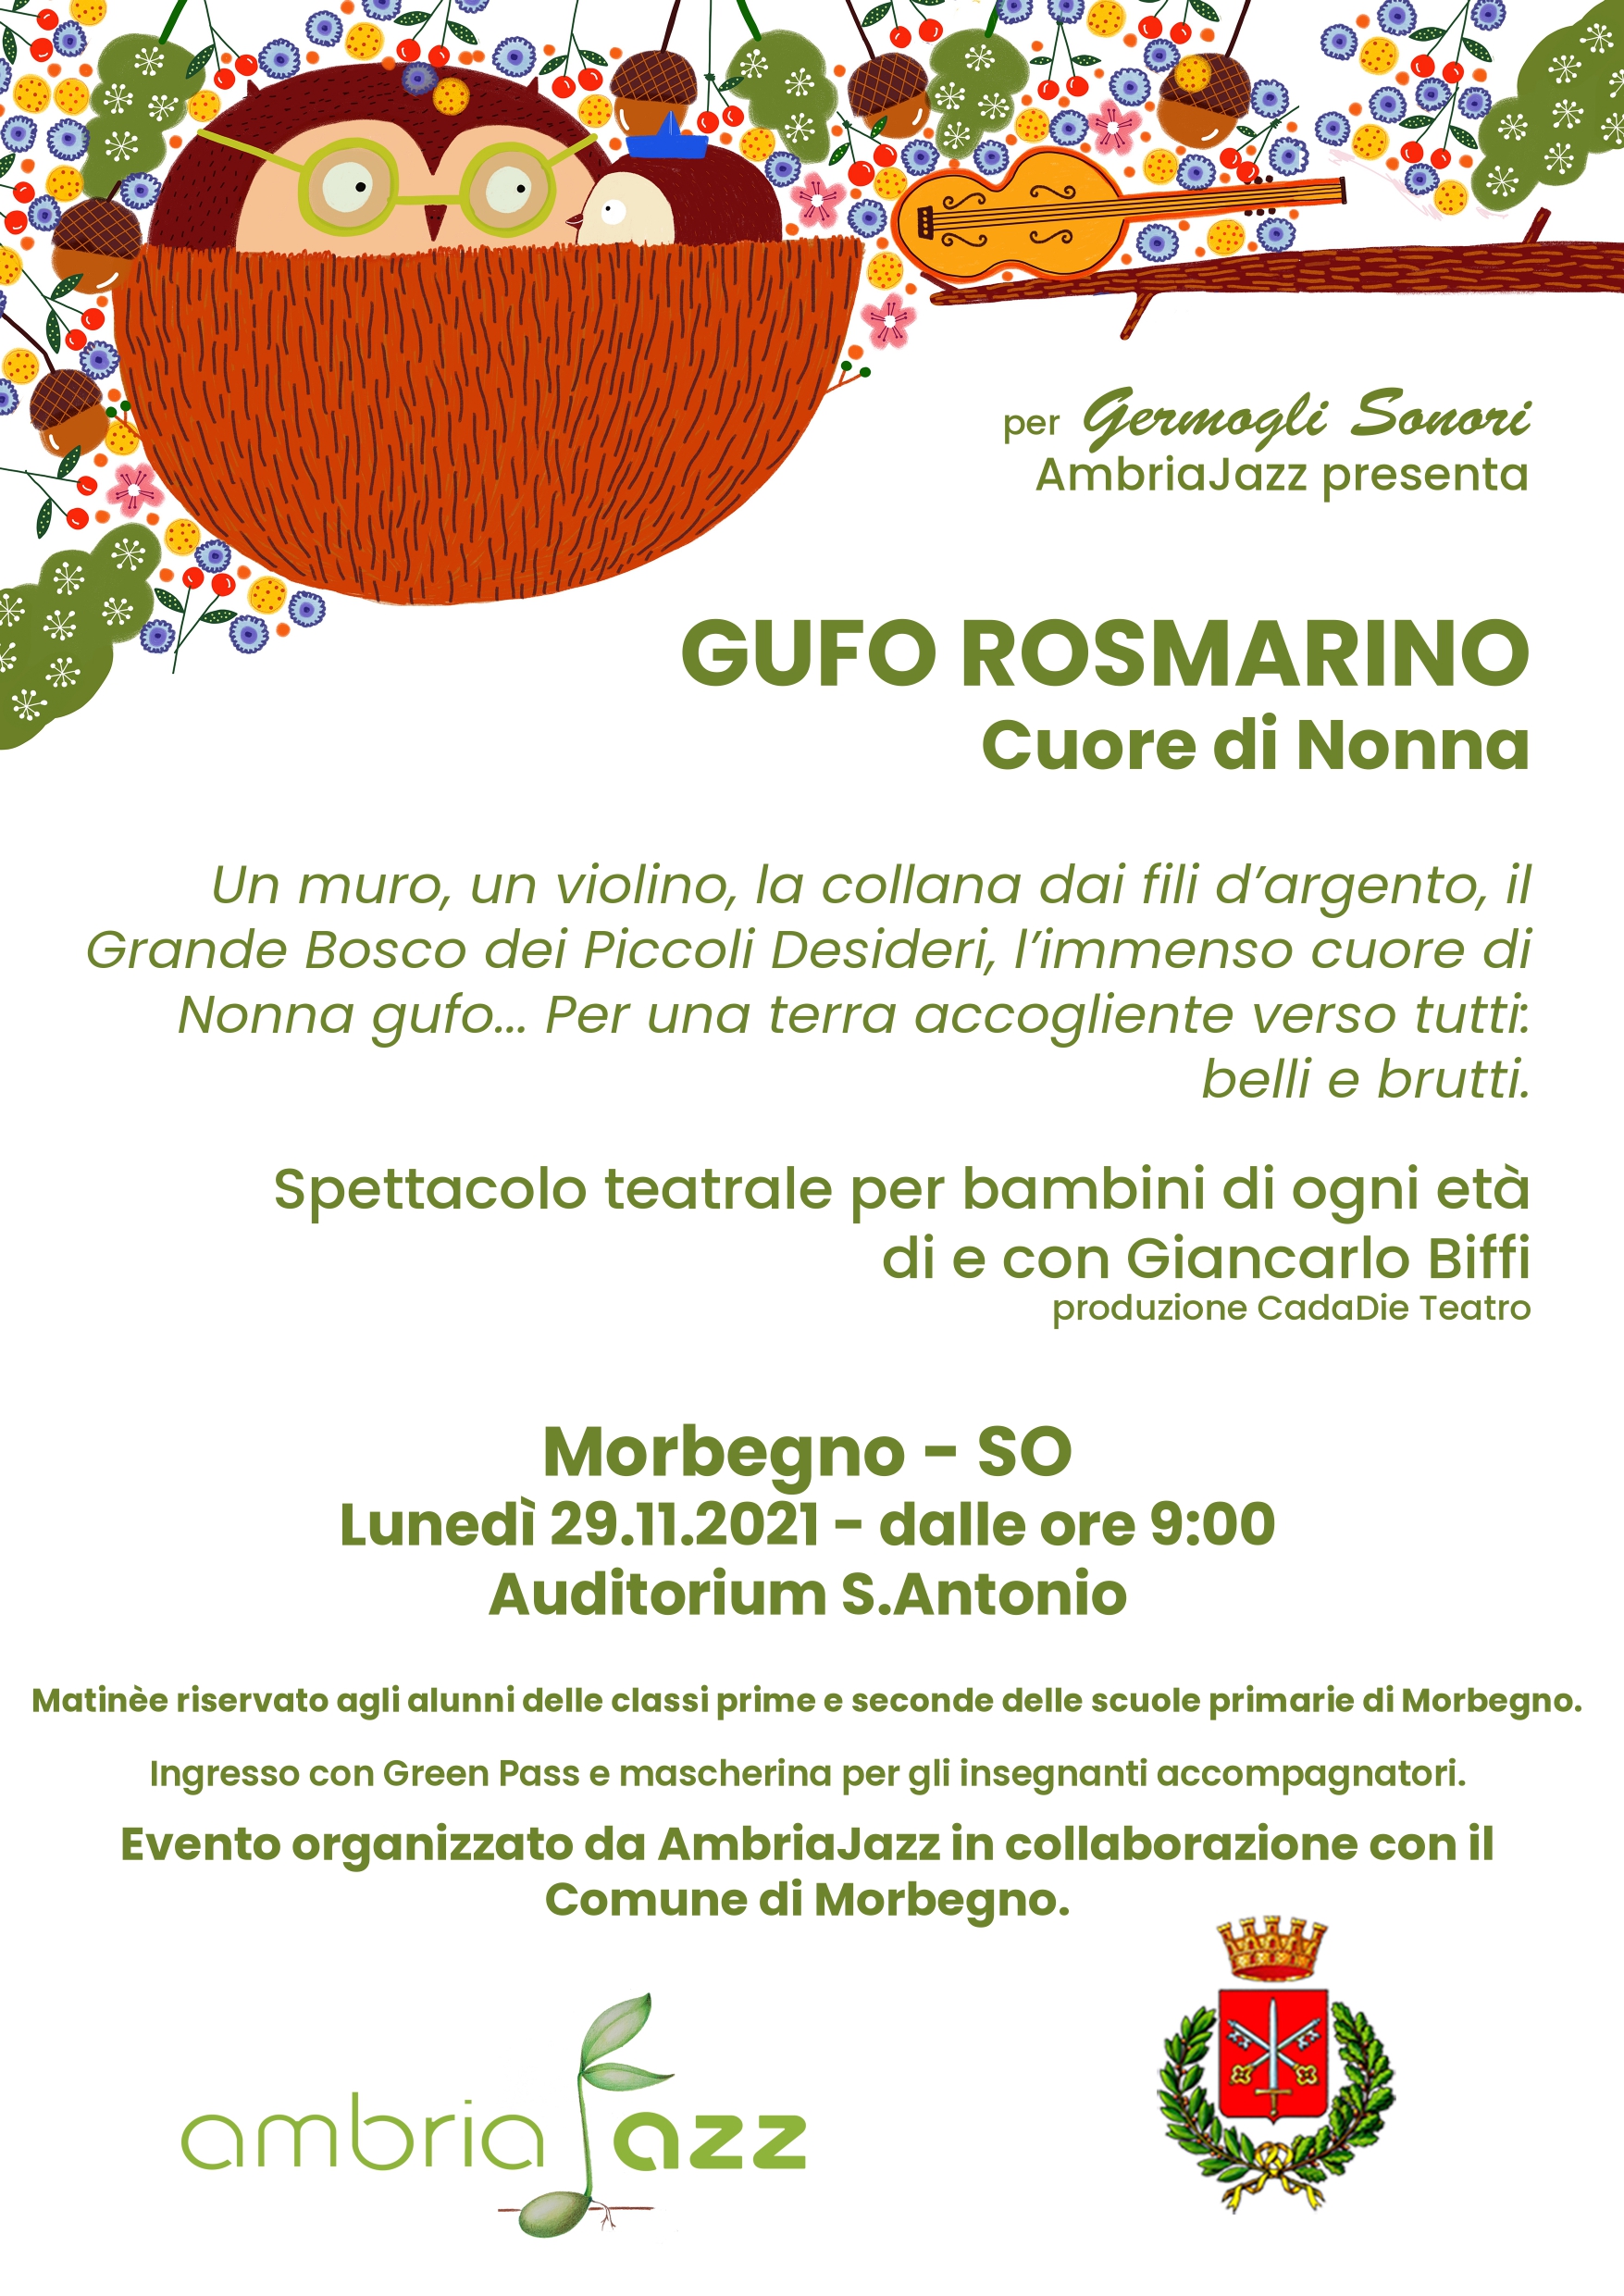 Gufo Rosmarino Locandina Morbegno_page-0001.jpg